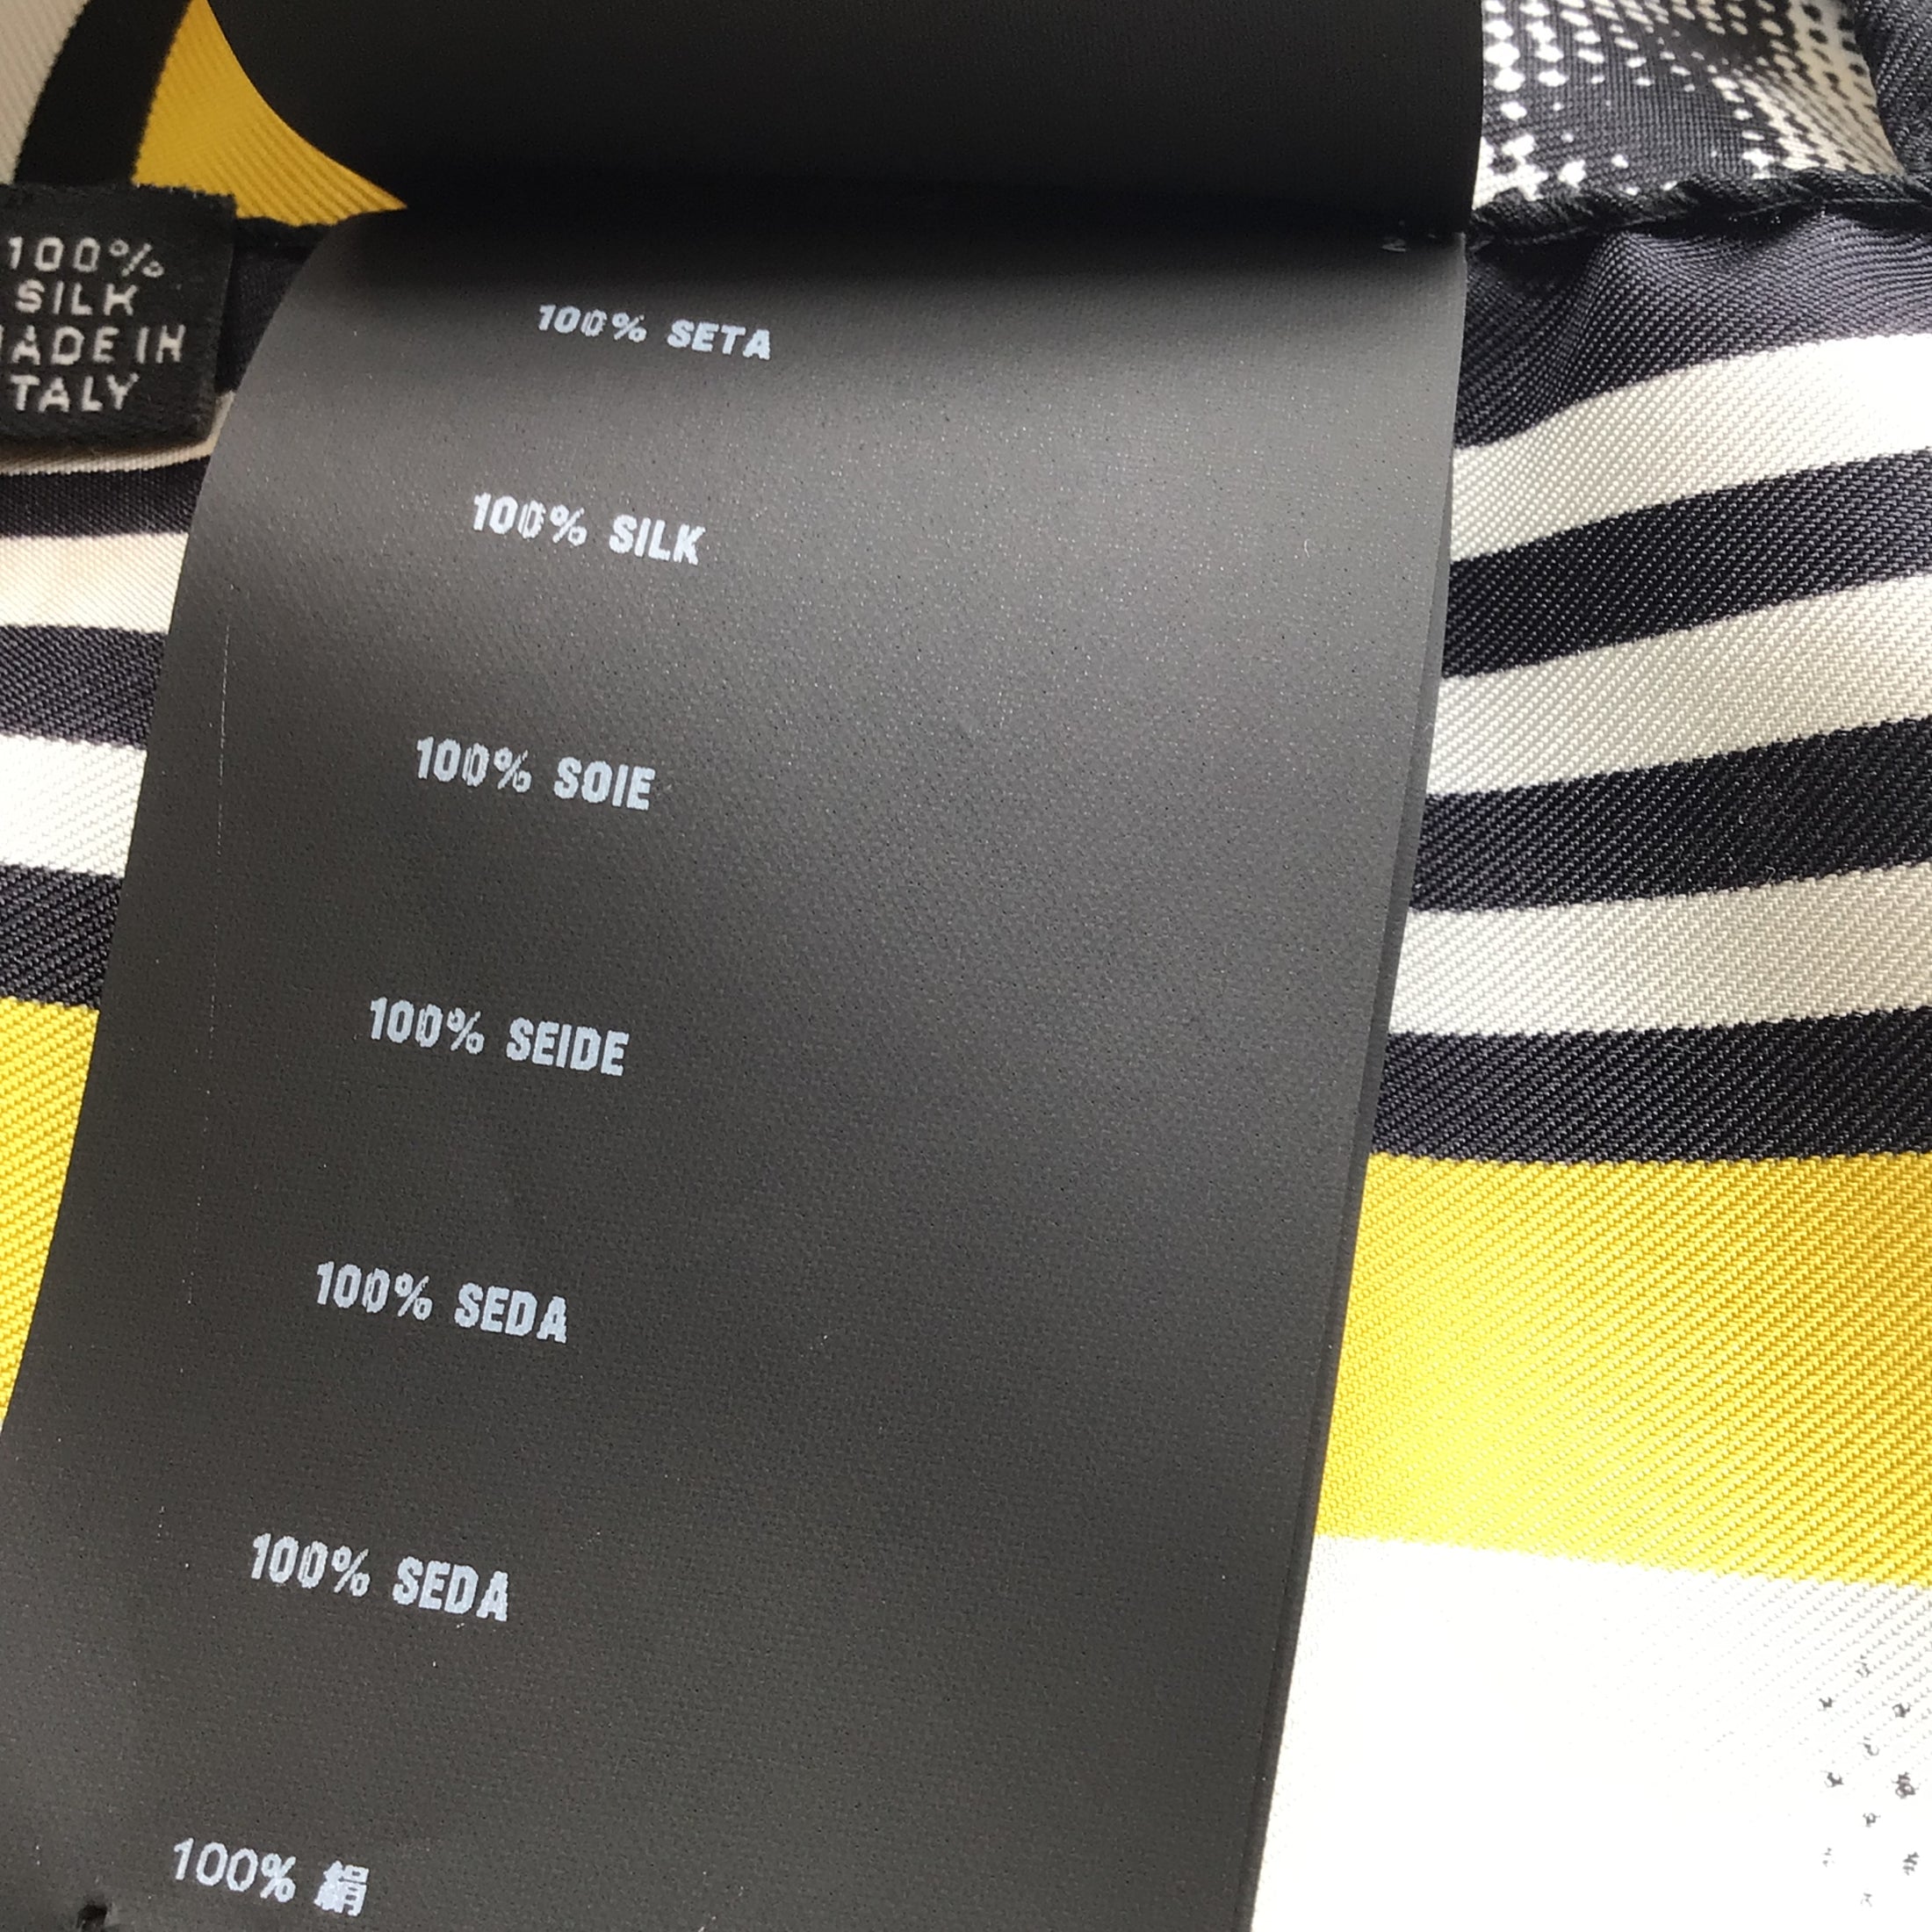 Prada White / Yellow / Orange / Black 2015 Bunny Arrow Print Square Silk Scarf